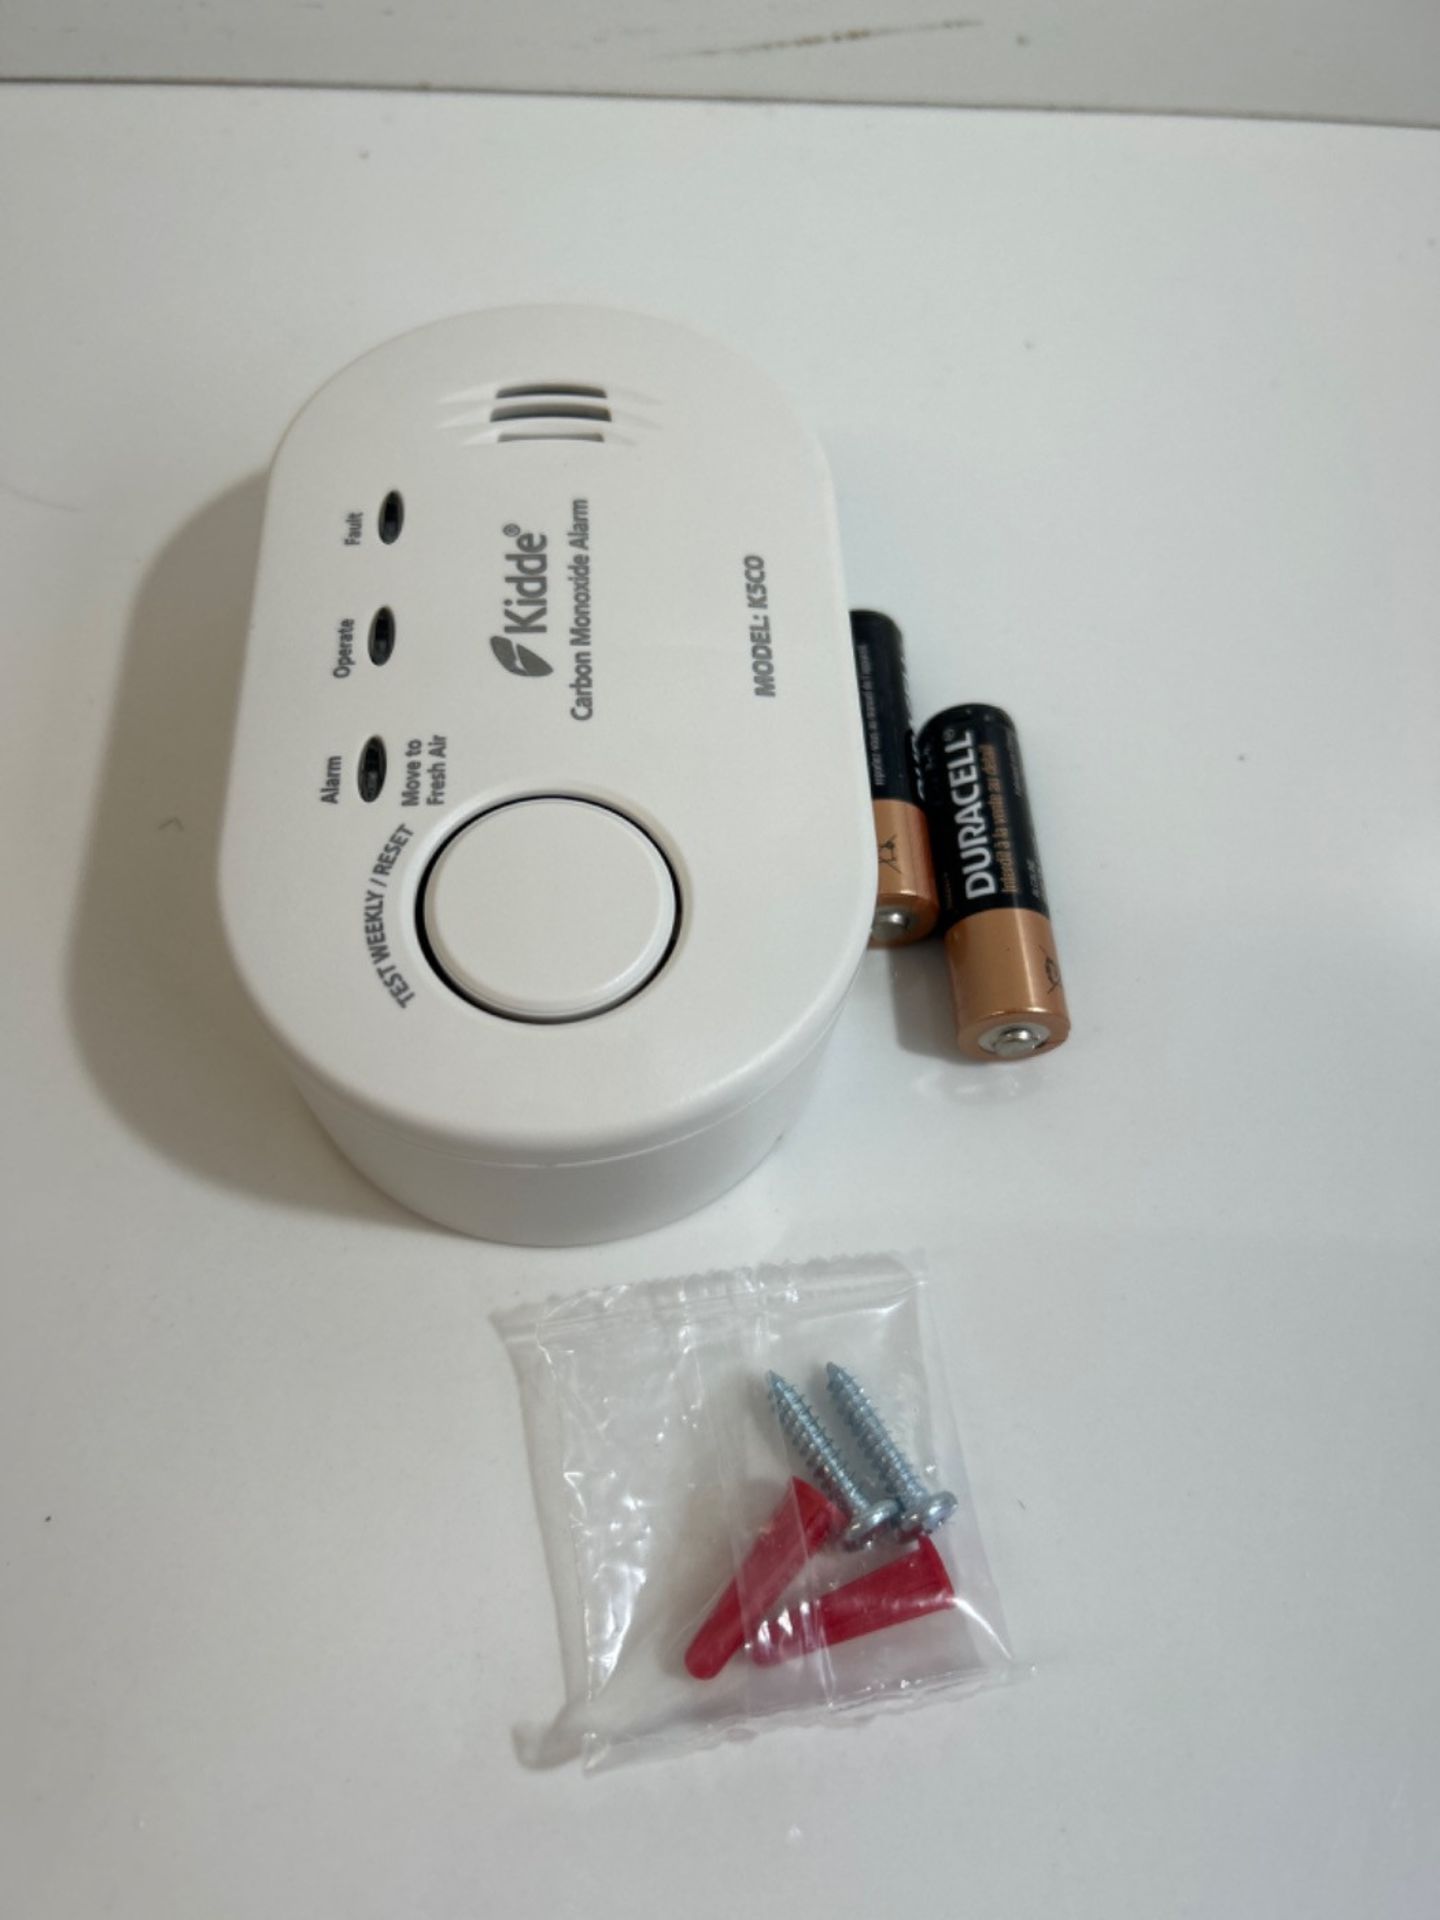 Kidde Carbon Monoxide Alarm - Image 2 of 3